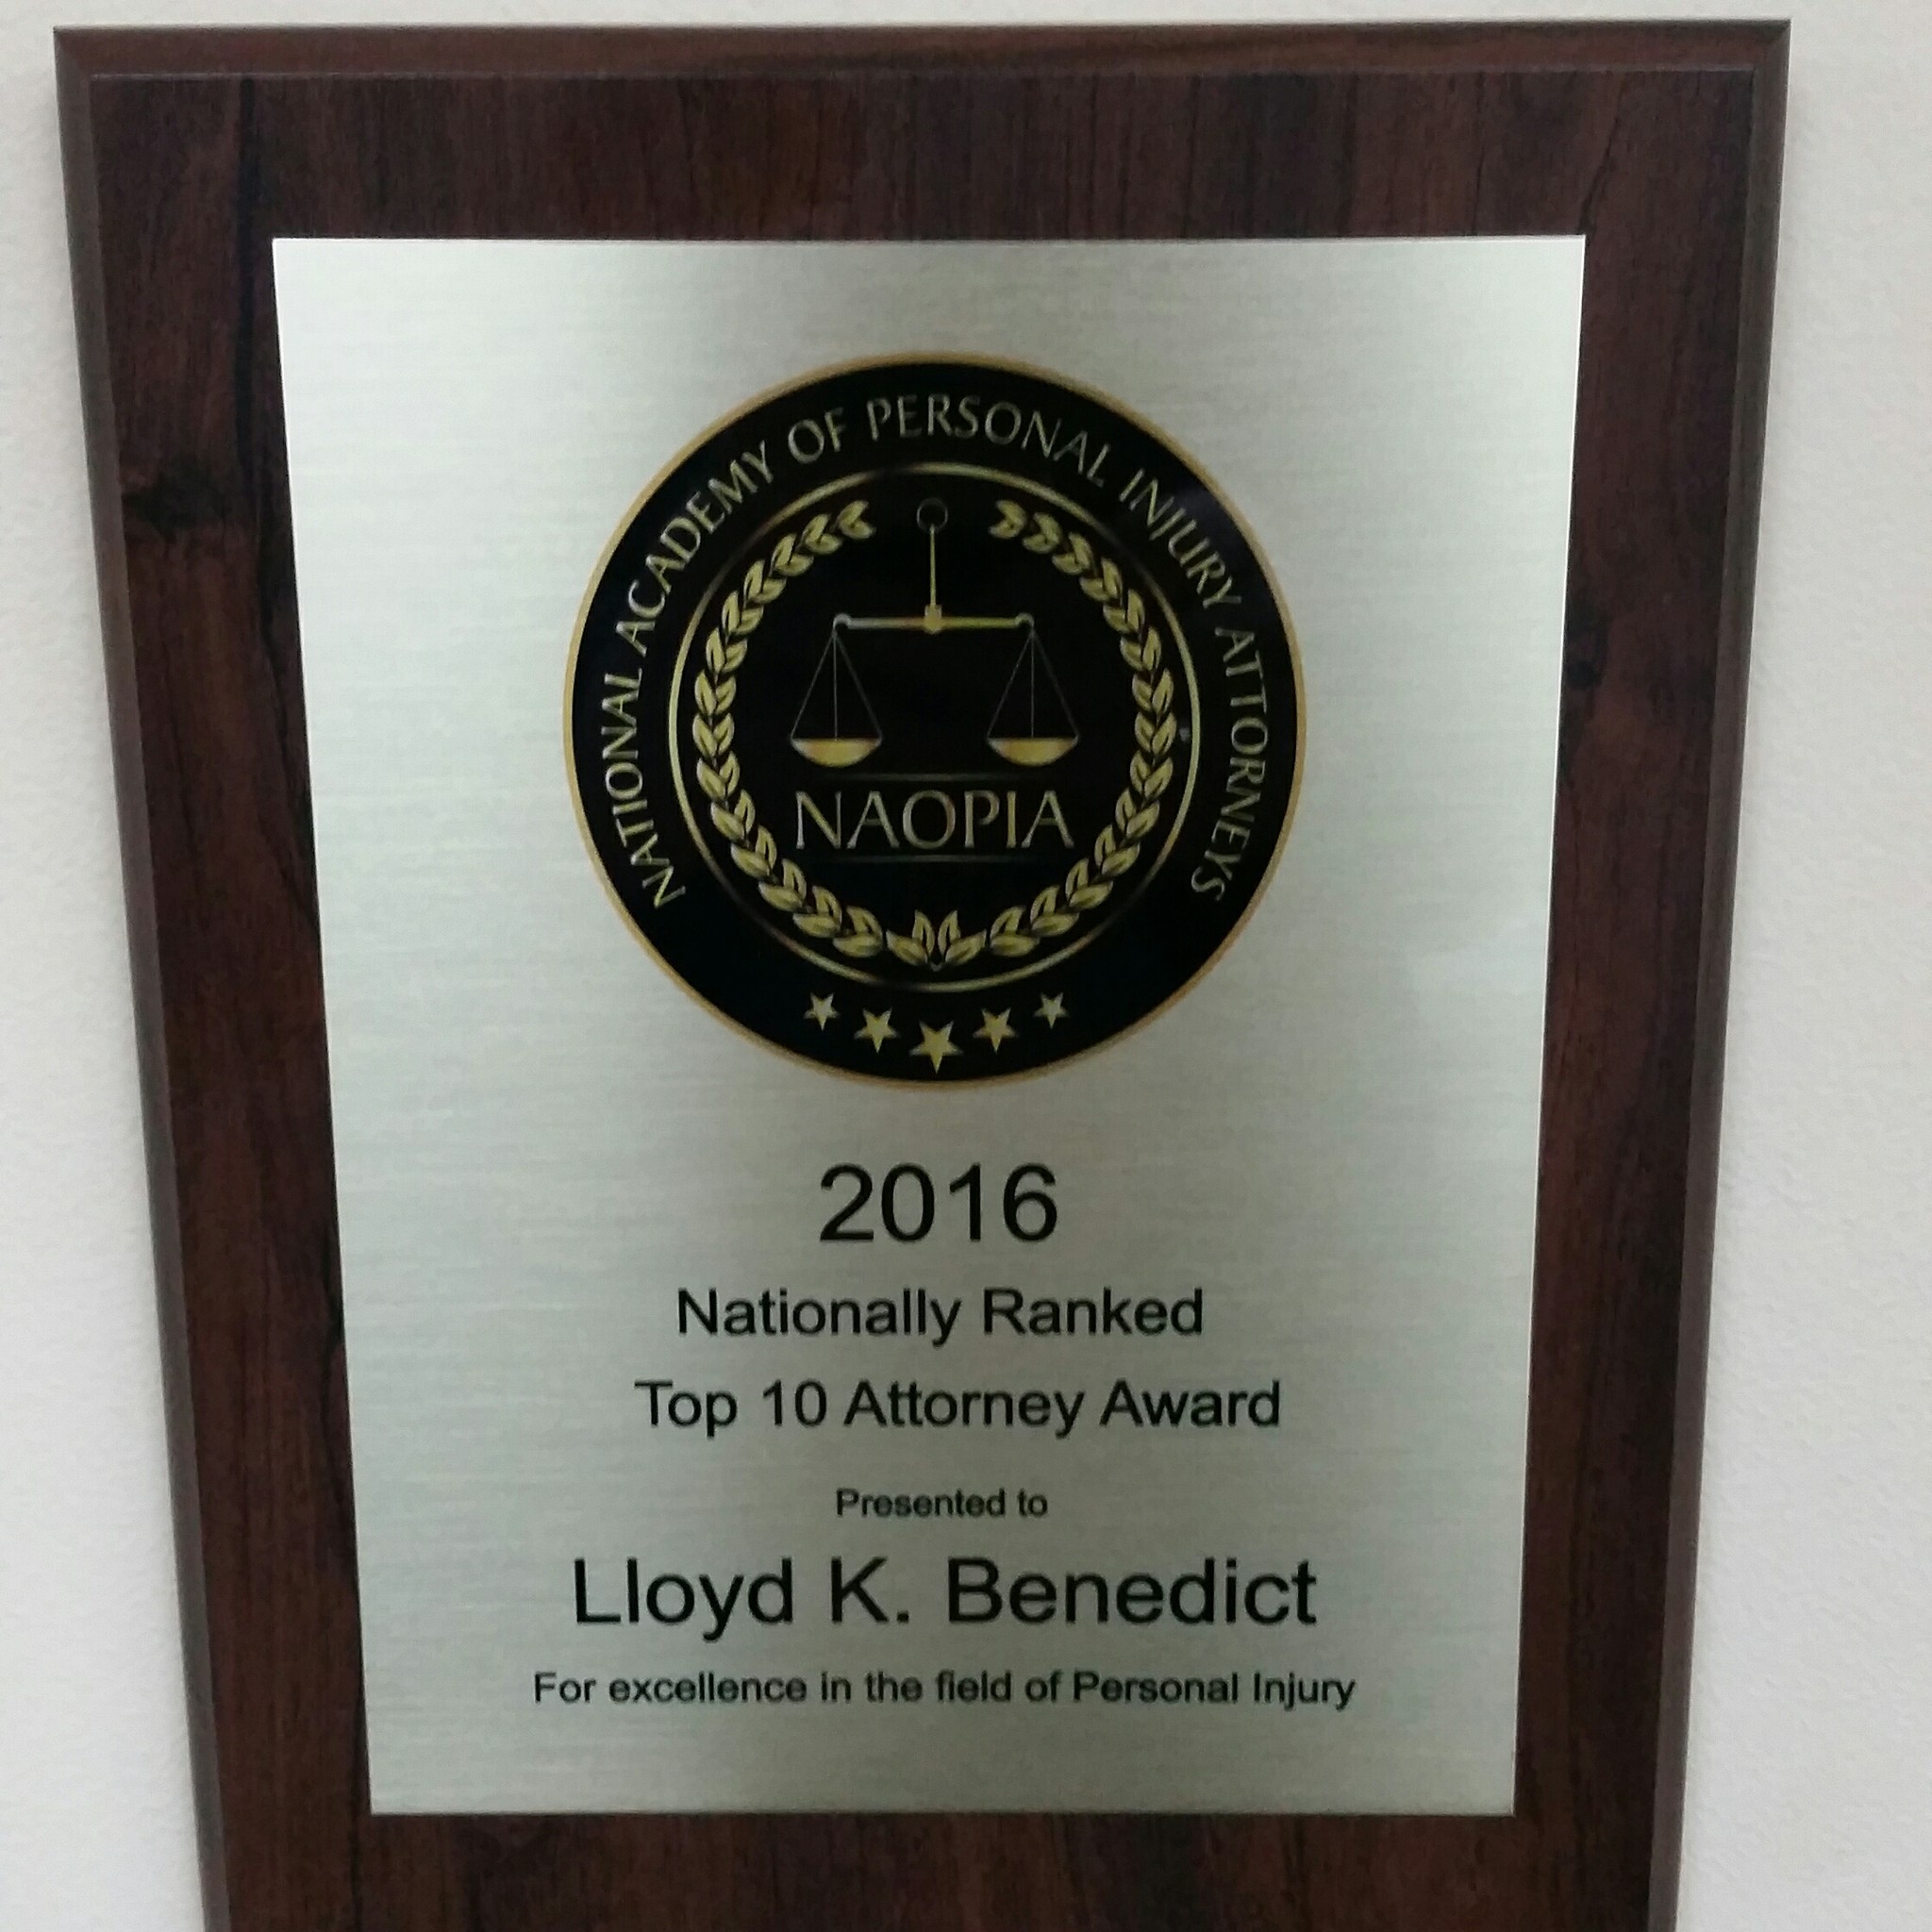 Top 10 Attorney 2016 award plaque for Lloyd K. Benedict